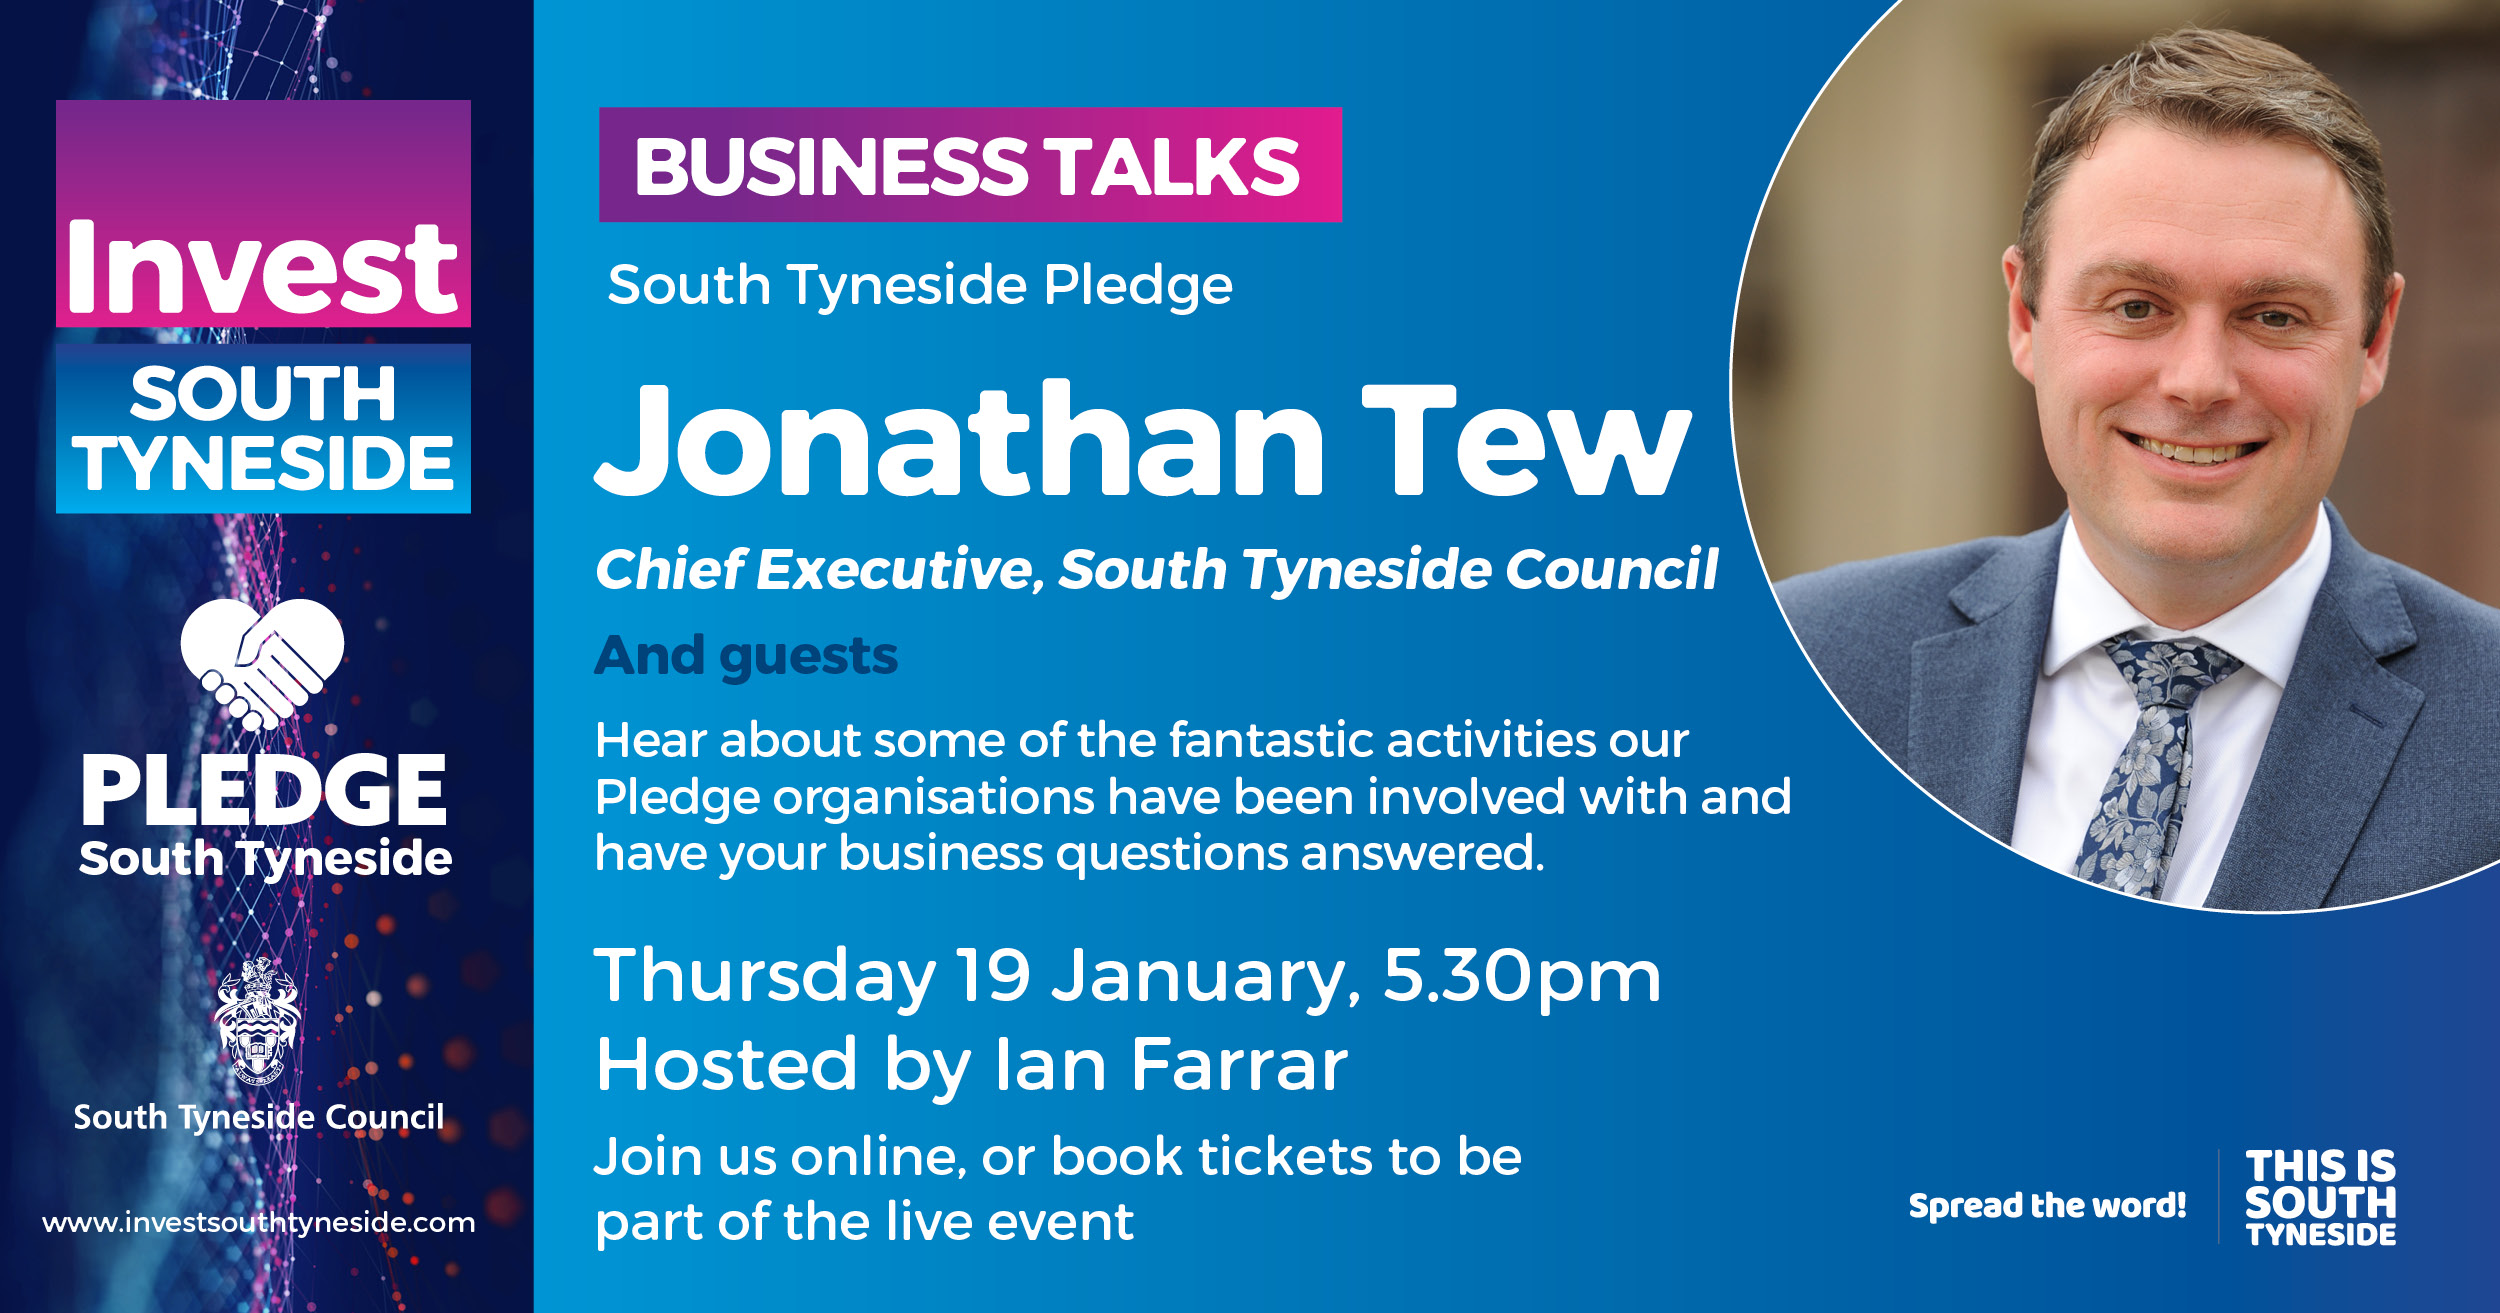 Business Talk: South Tyneside Pledge